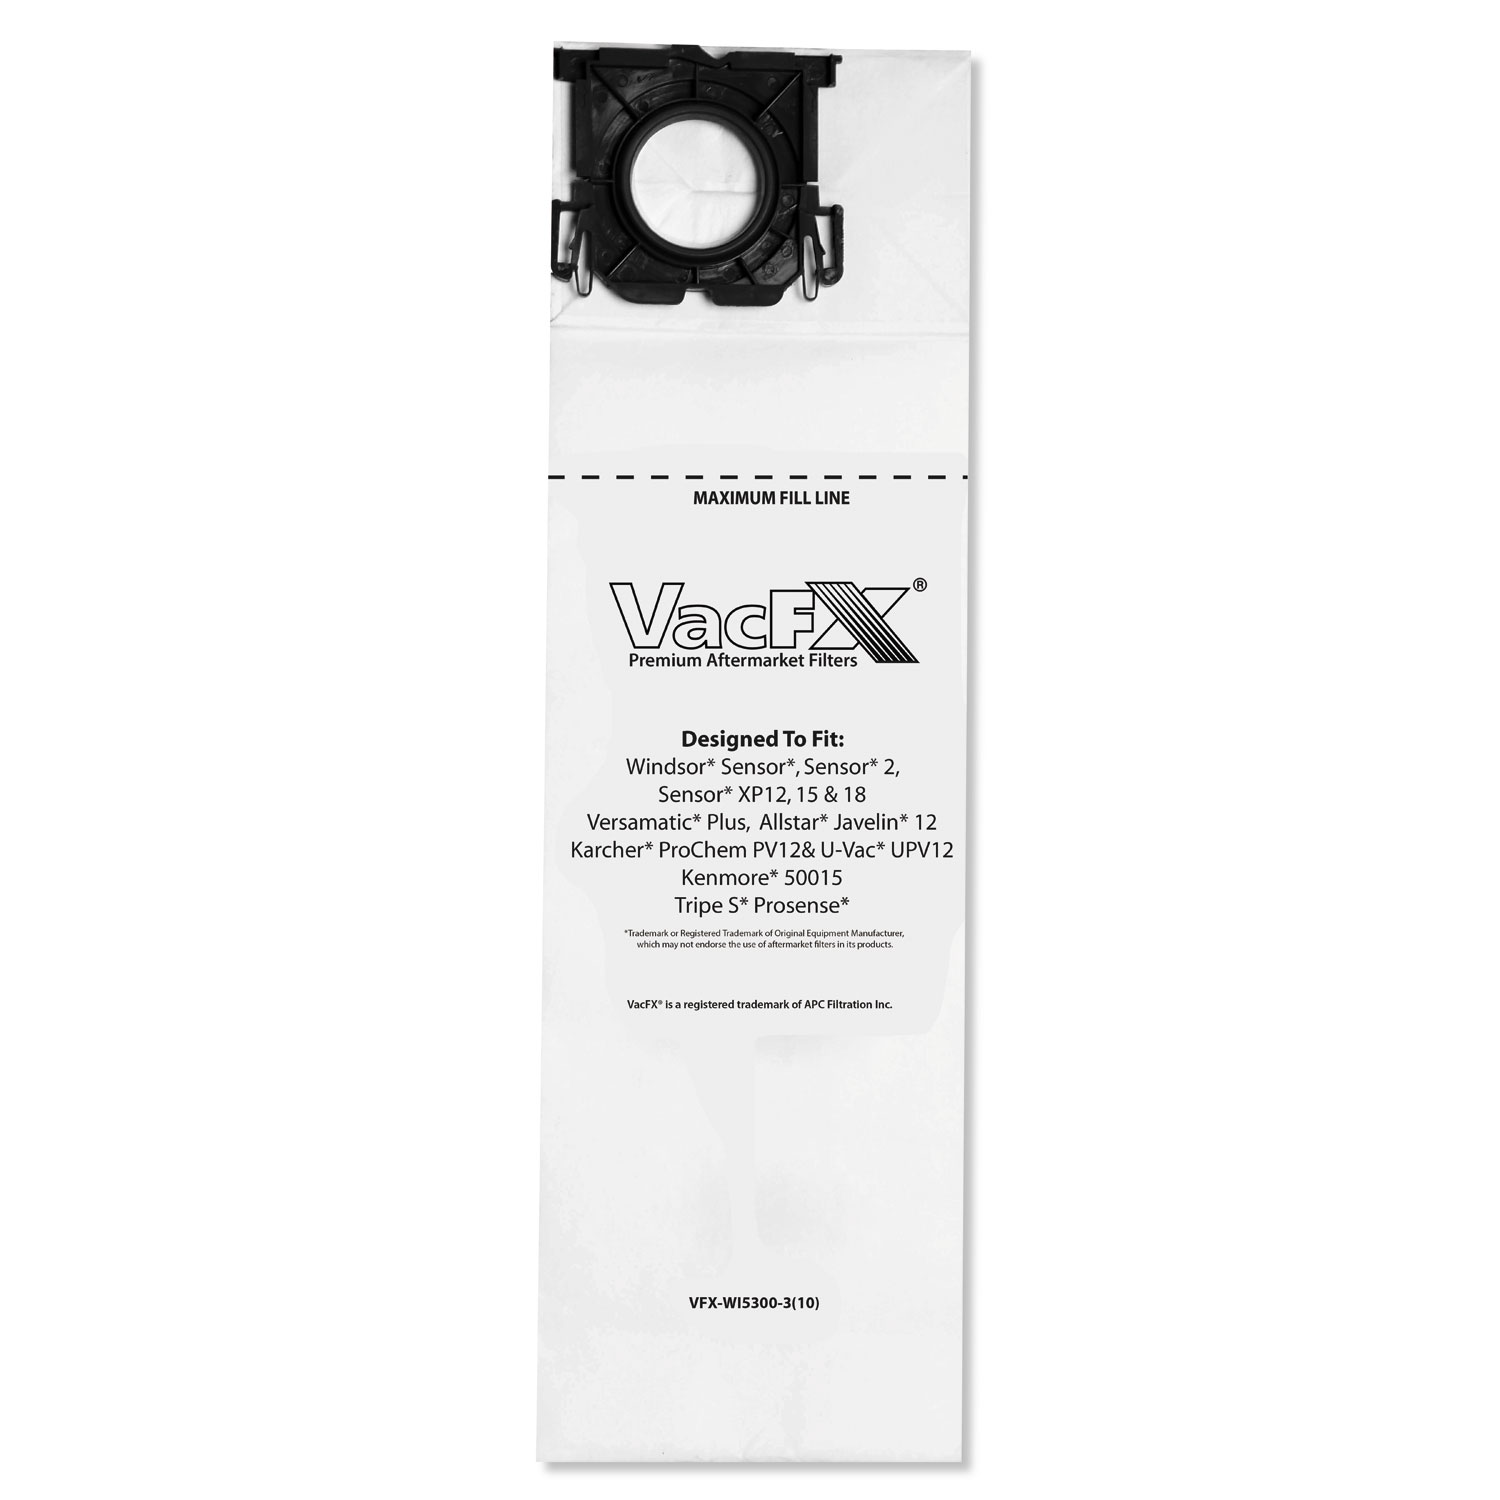  VacFX VFX-WI5300-3(10) Vacuum Filter Bags Designed to Fit Windsor Sensor S/S2/XP/Veramatic Plus, 100/CT (APCVFXW15300310) 